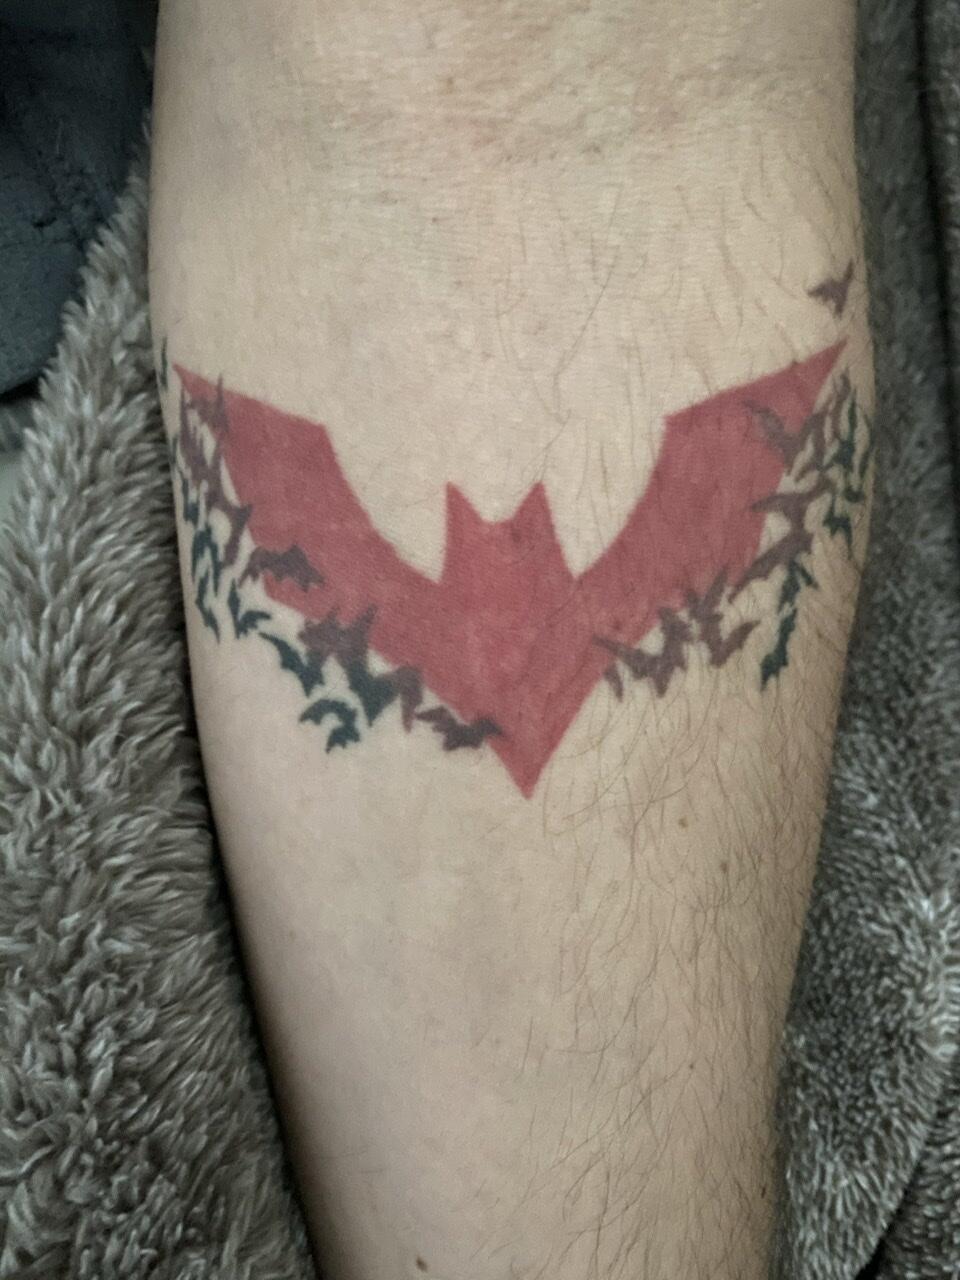 Batman logo tattoo hand poked on the achilles,